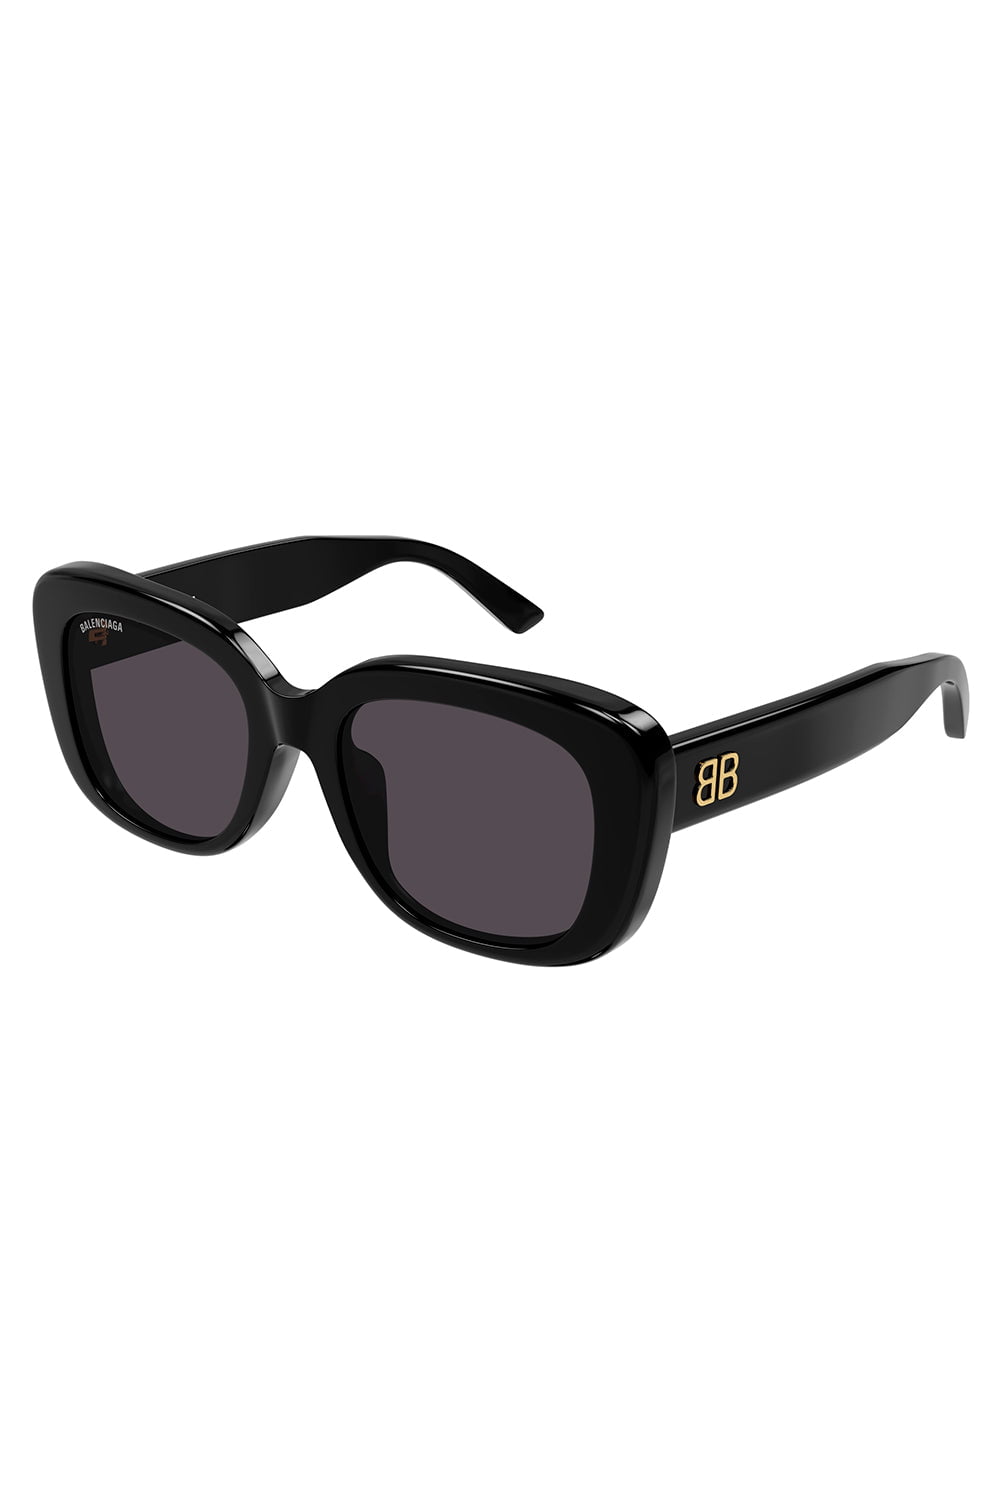 BALENCIAGA-Monaco Sunglasses-BLACK/GREY